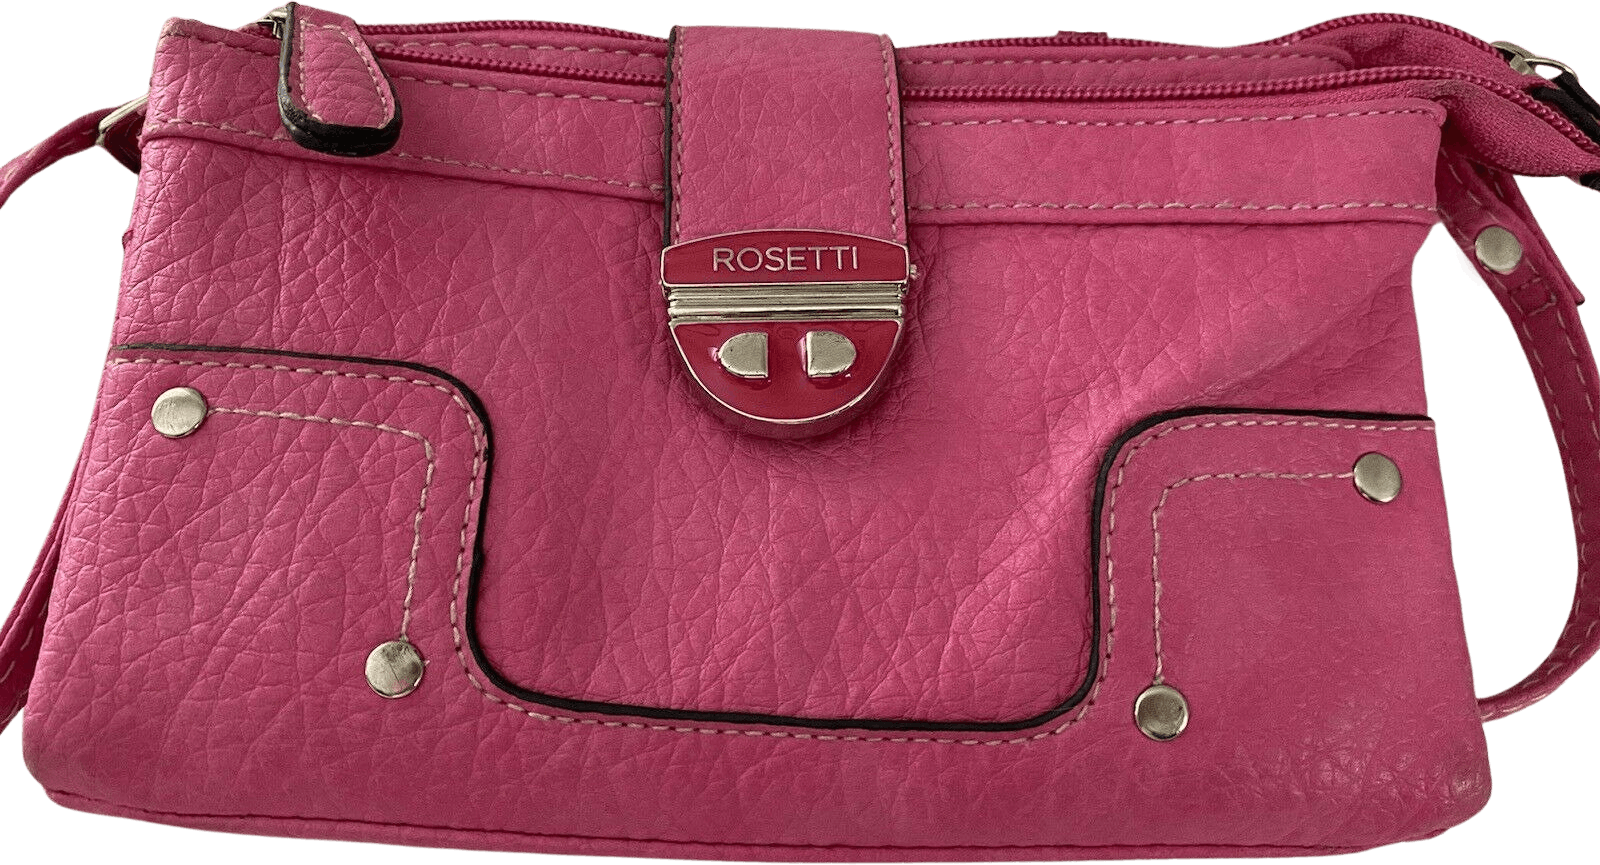 Rosetti Vintage Pink Small Handbag Purse - $24 (45% Off Retail) - From  Helene